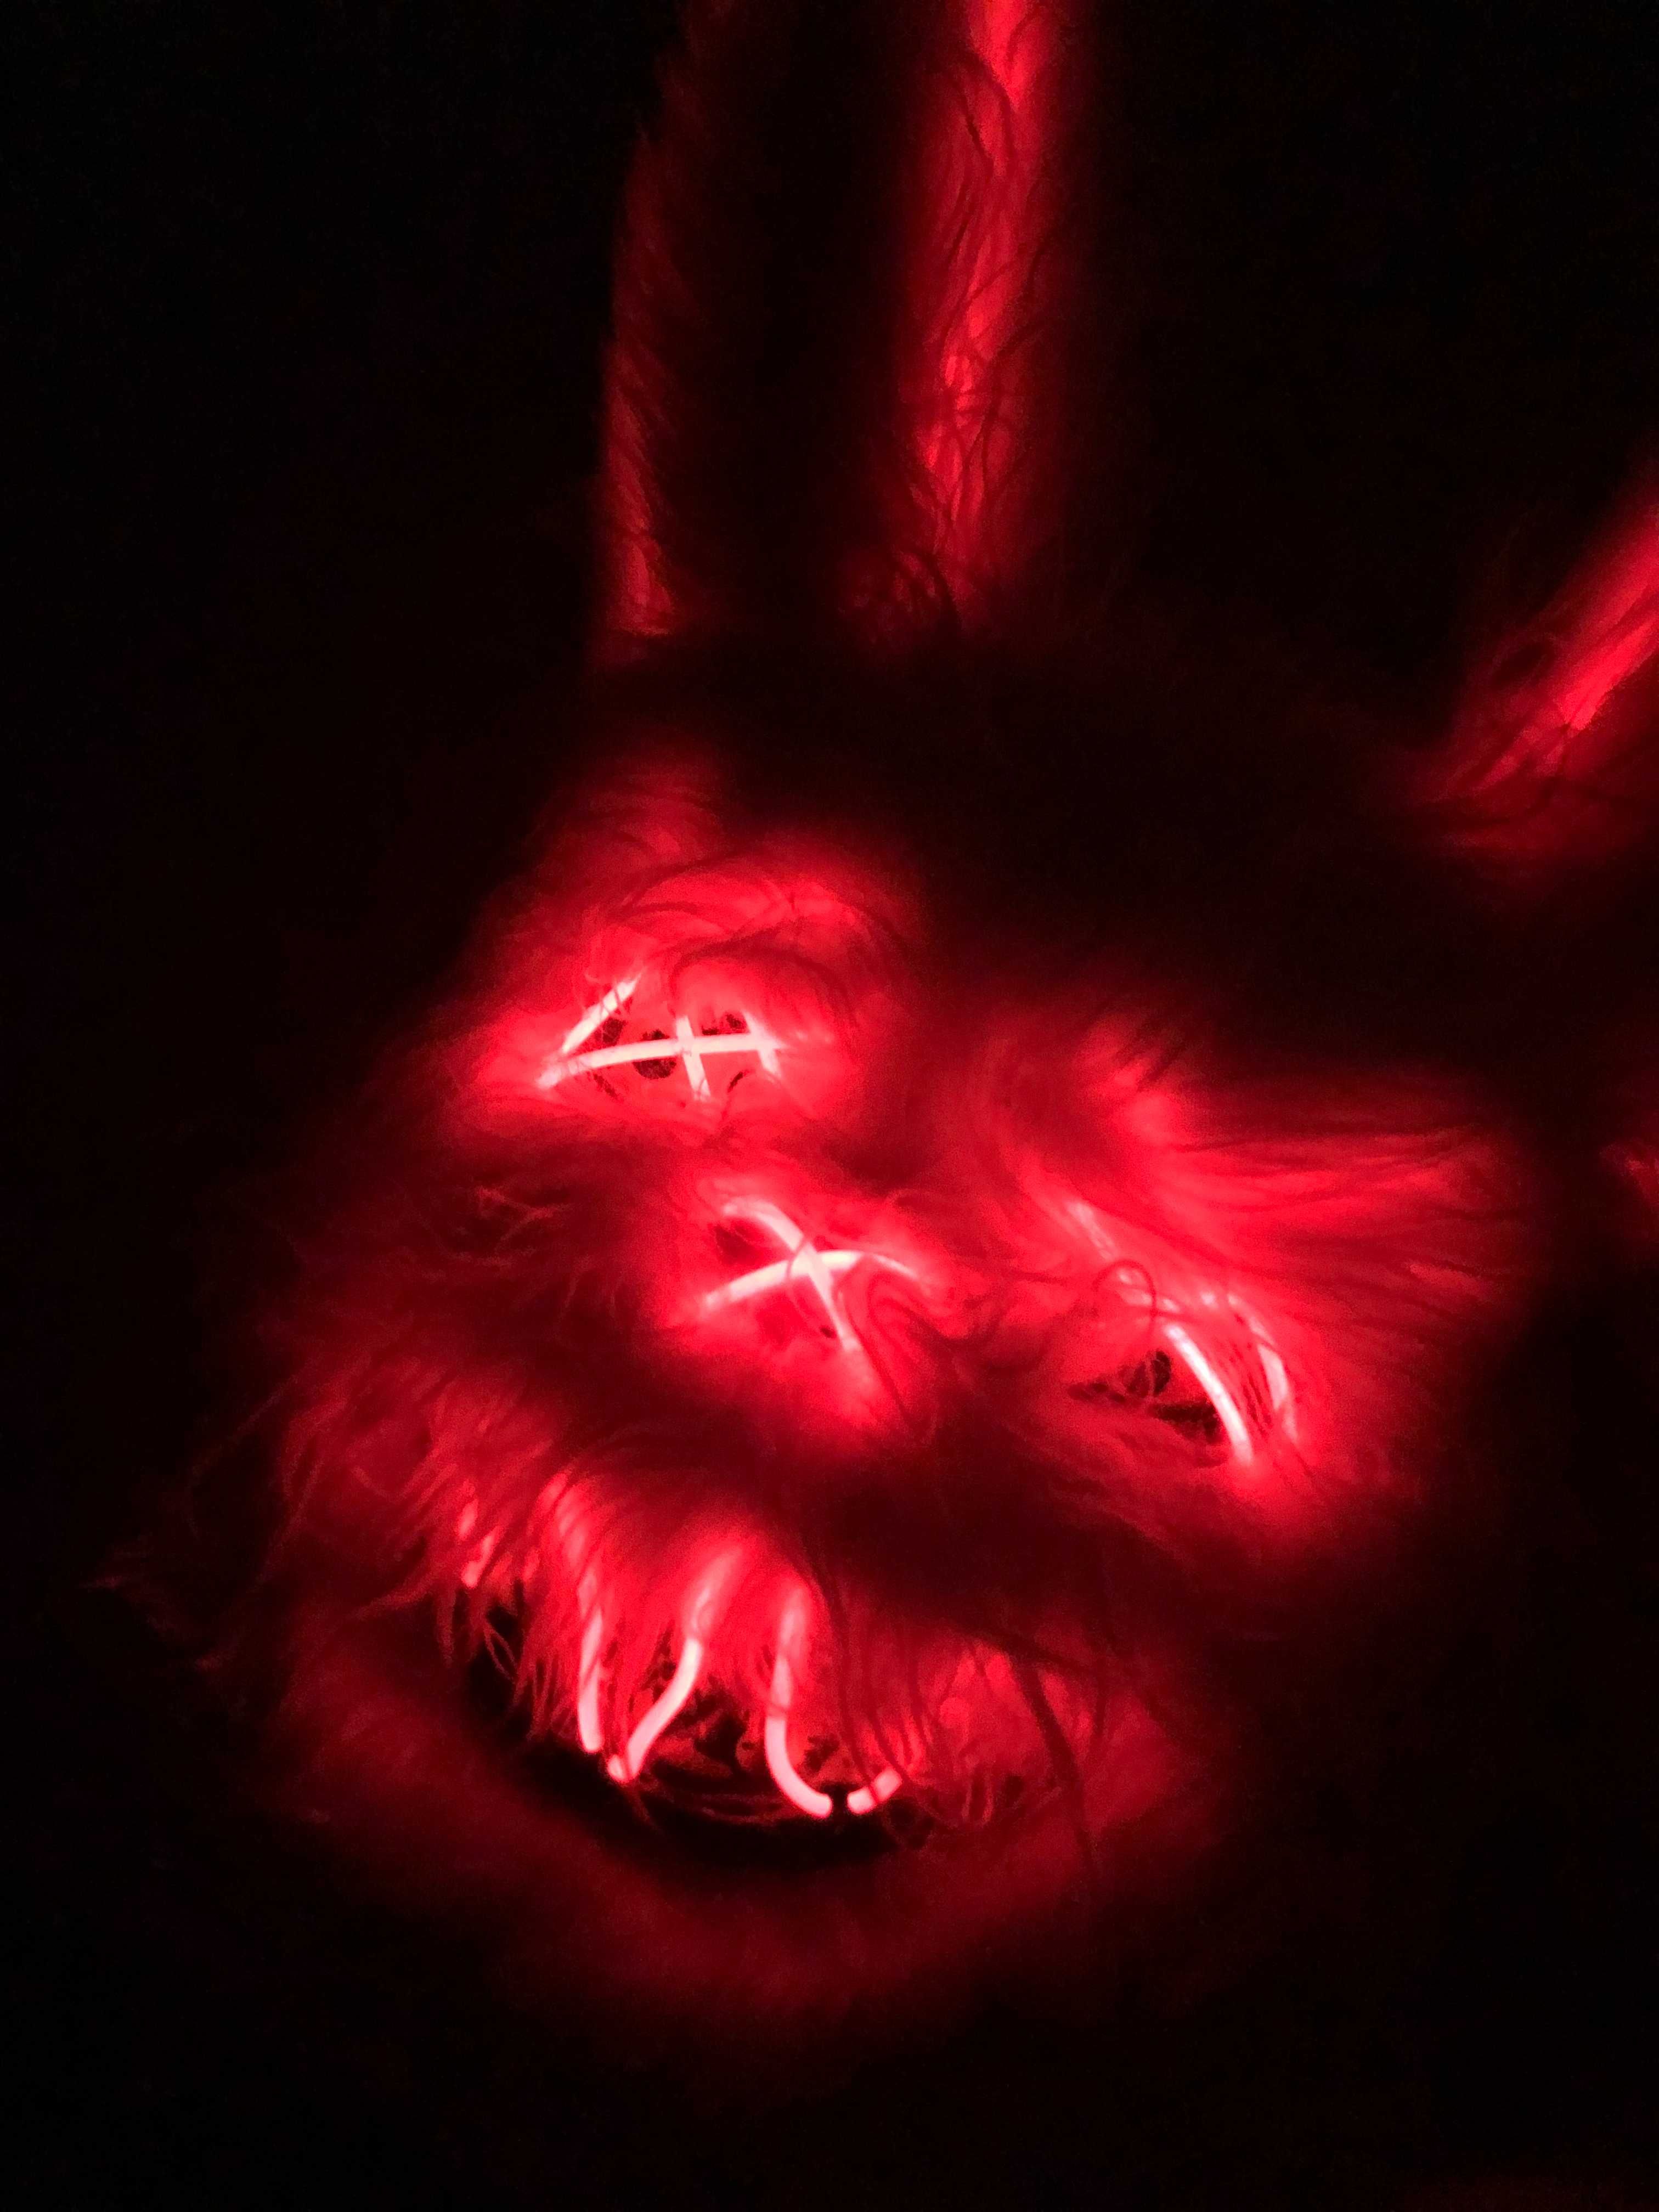 Máscara coelho assustador LED